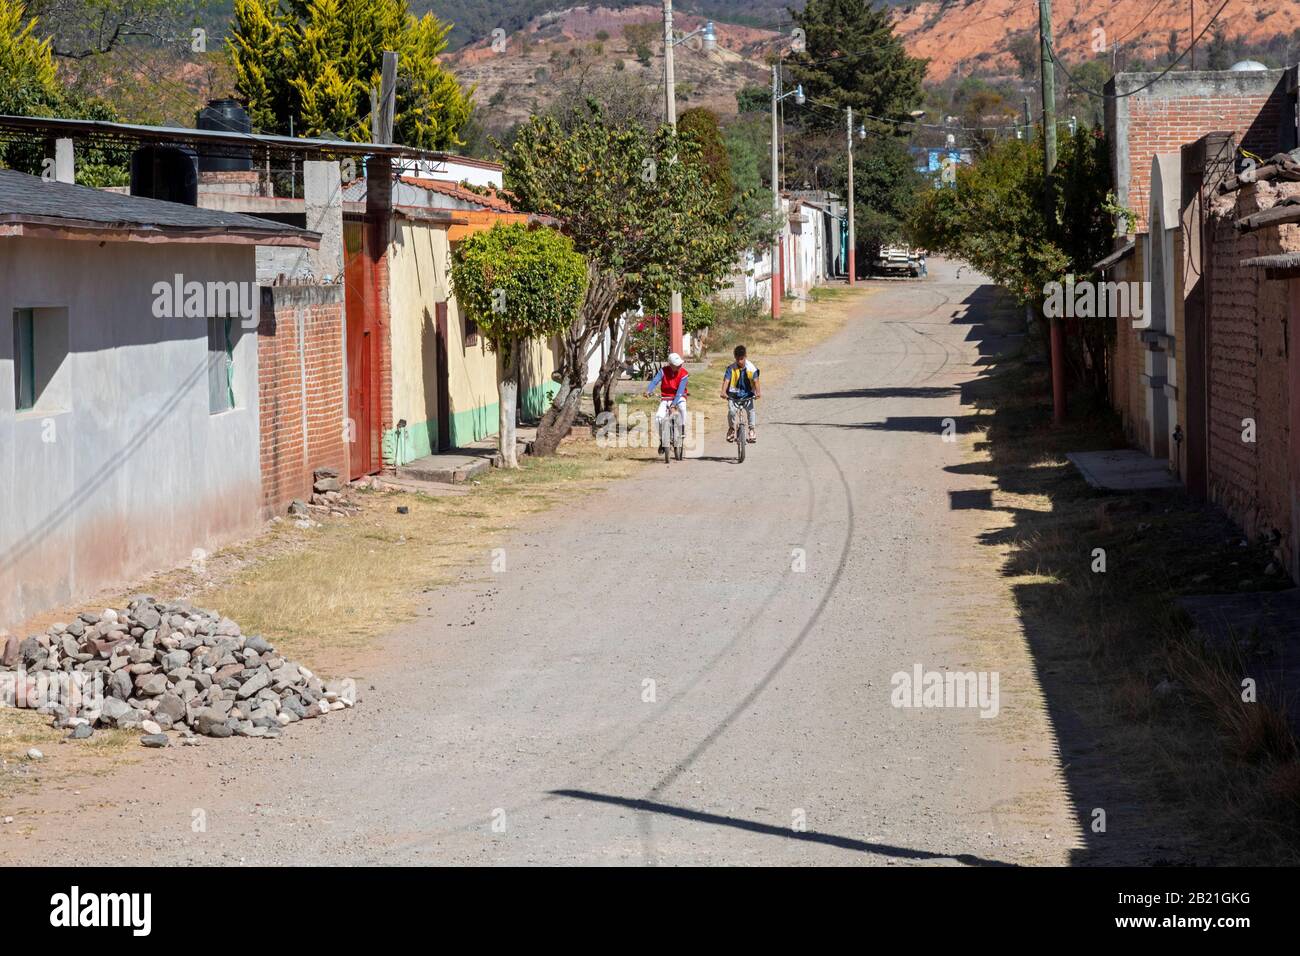 Yanhuitlan, Oaxaca, Mexico - Boys ride their bicycles on a town street. Stock Photo